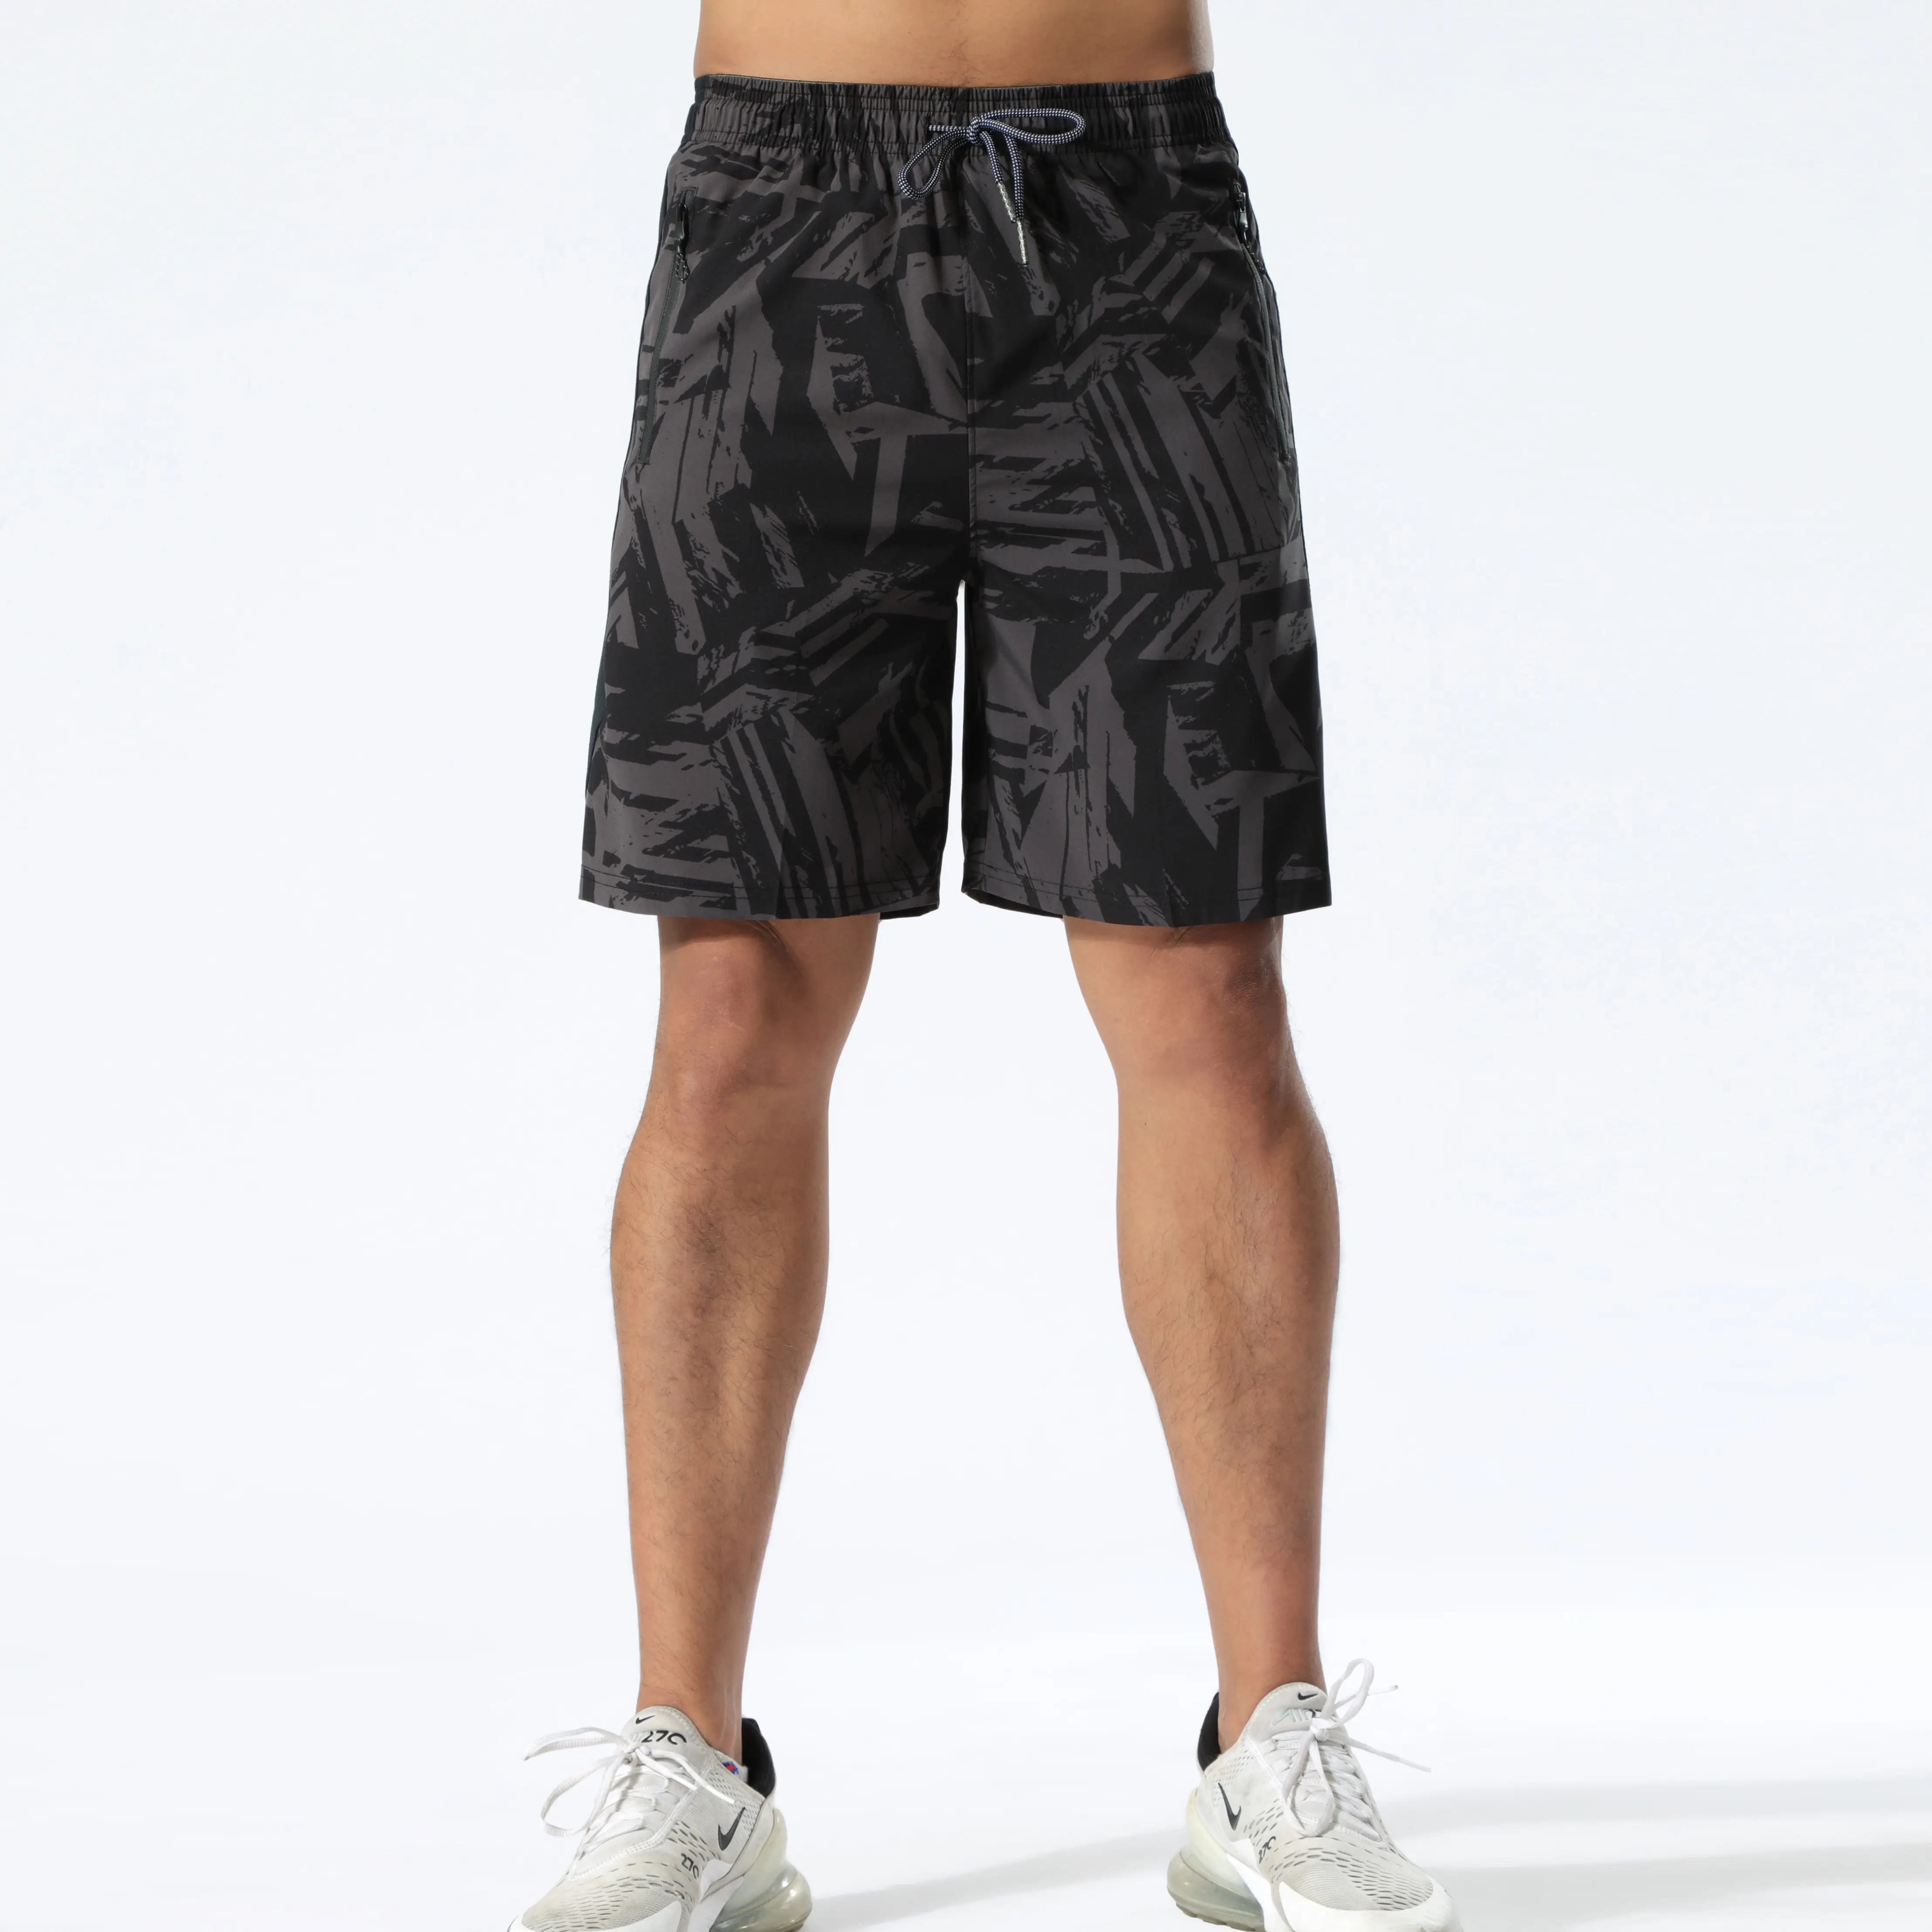 Factory hot sales casual men's jogger shorts sport men's shorts shorts with zipper pockets